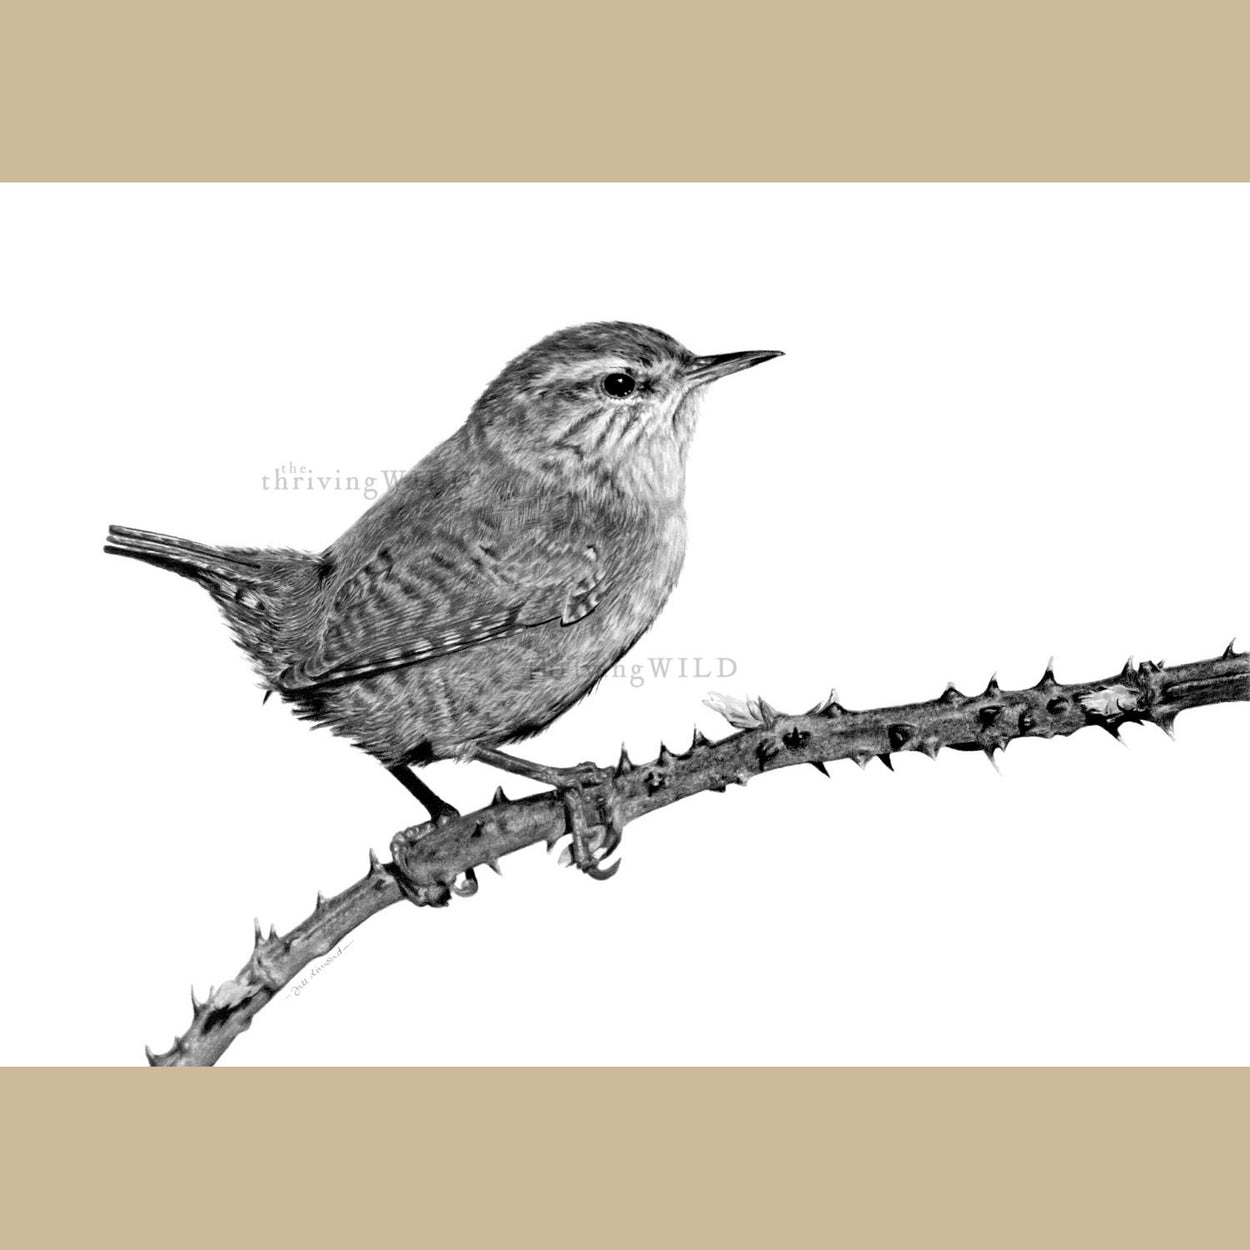 Wren Bird Prints - The Thriving Wild